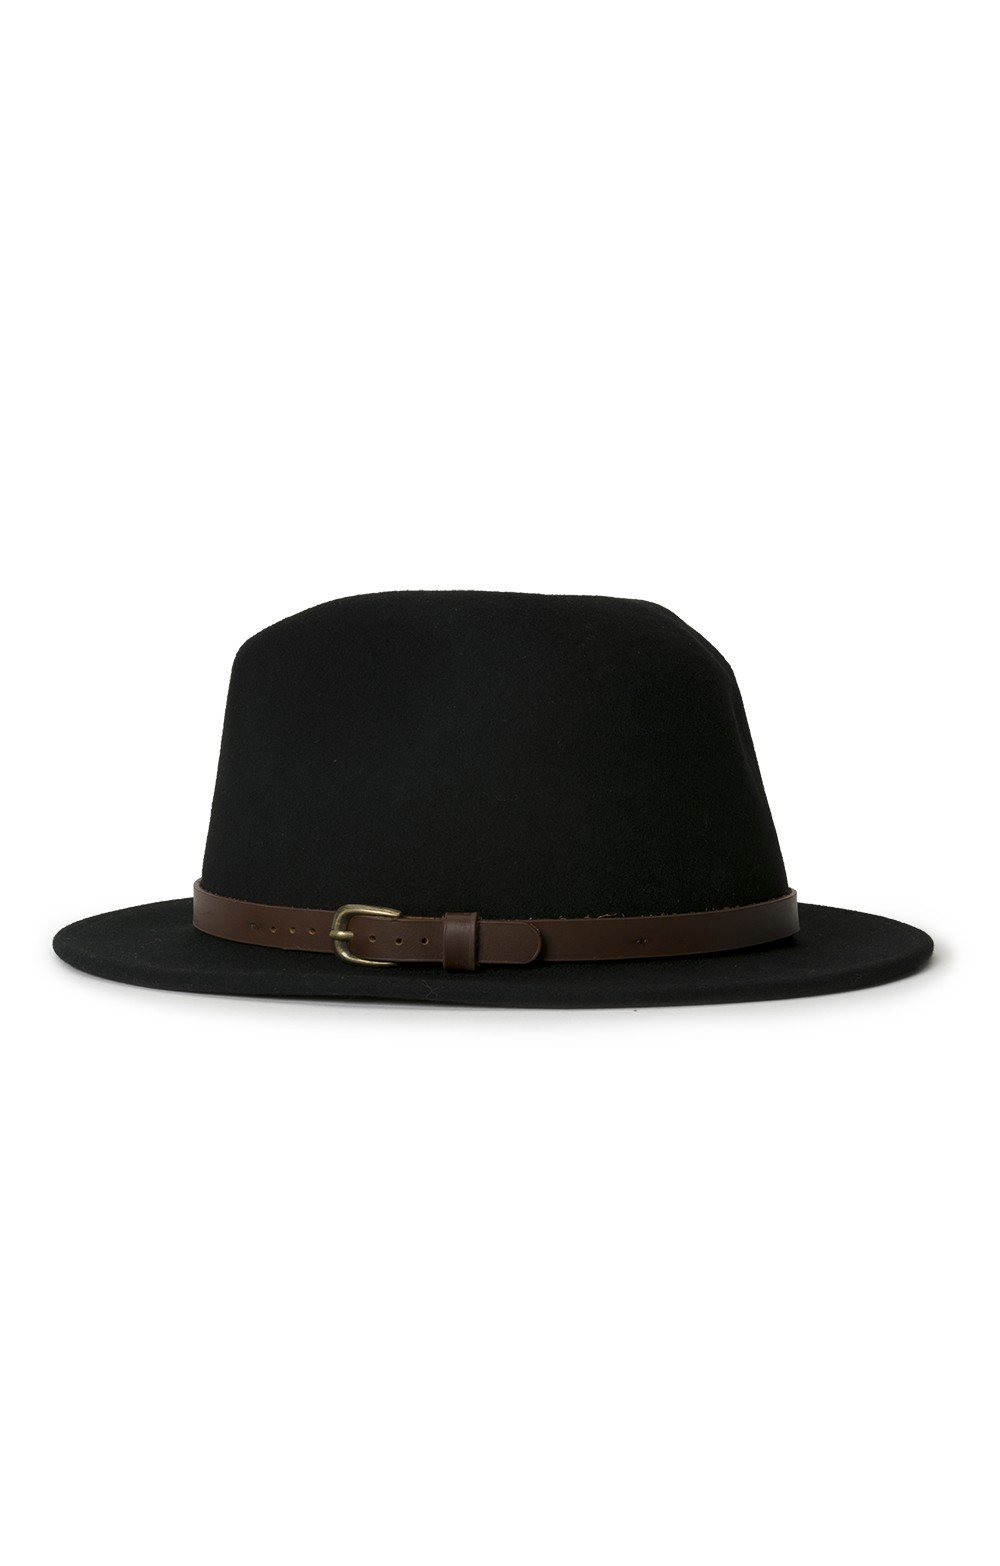 Failsworth Hats Adventurer Felt Hat - Black, Black